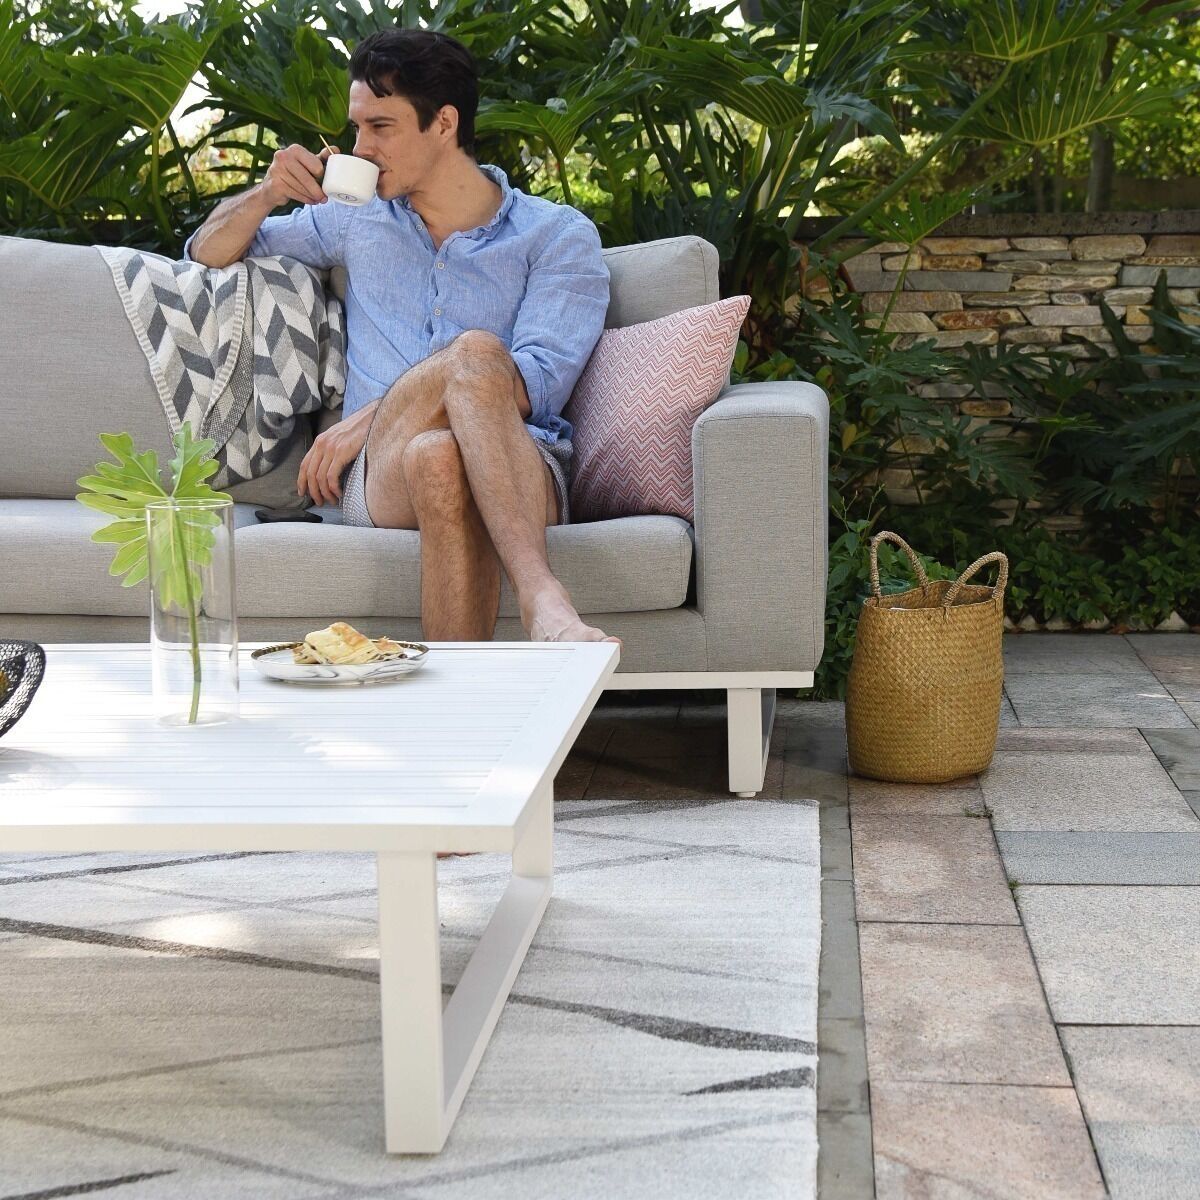 Maze - Outdoor Fabric Ethos 2 Seat Sofa Set - Lead Chine product image